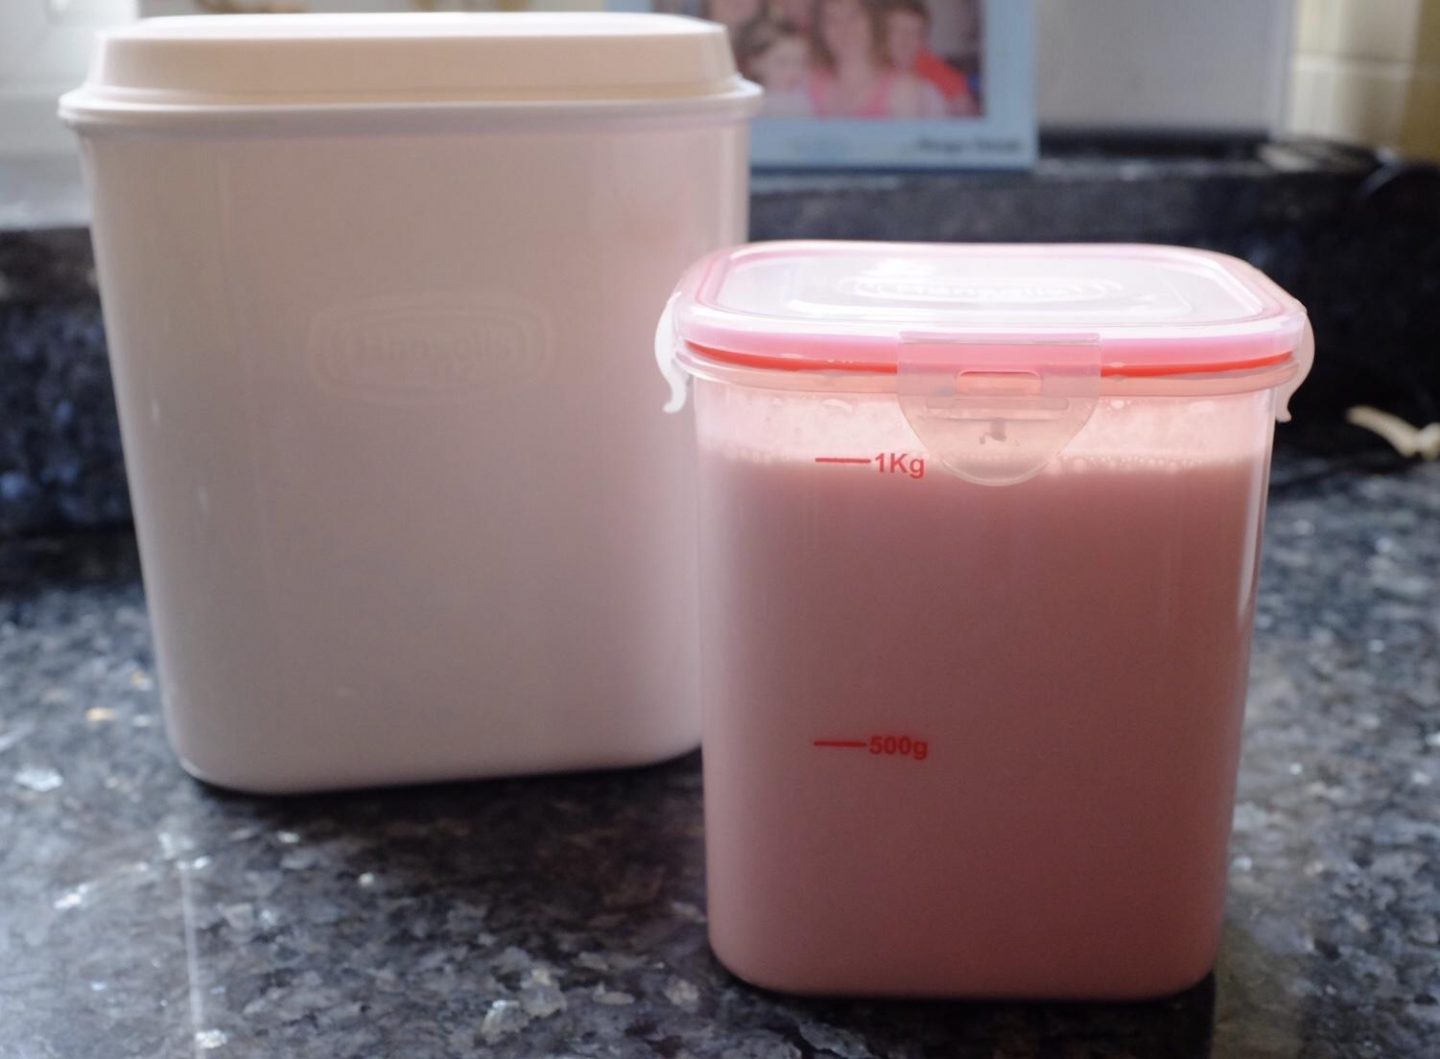 1kg of Hansells yoghurt mix